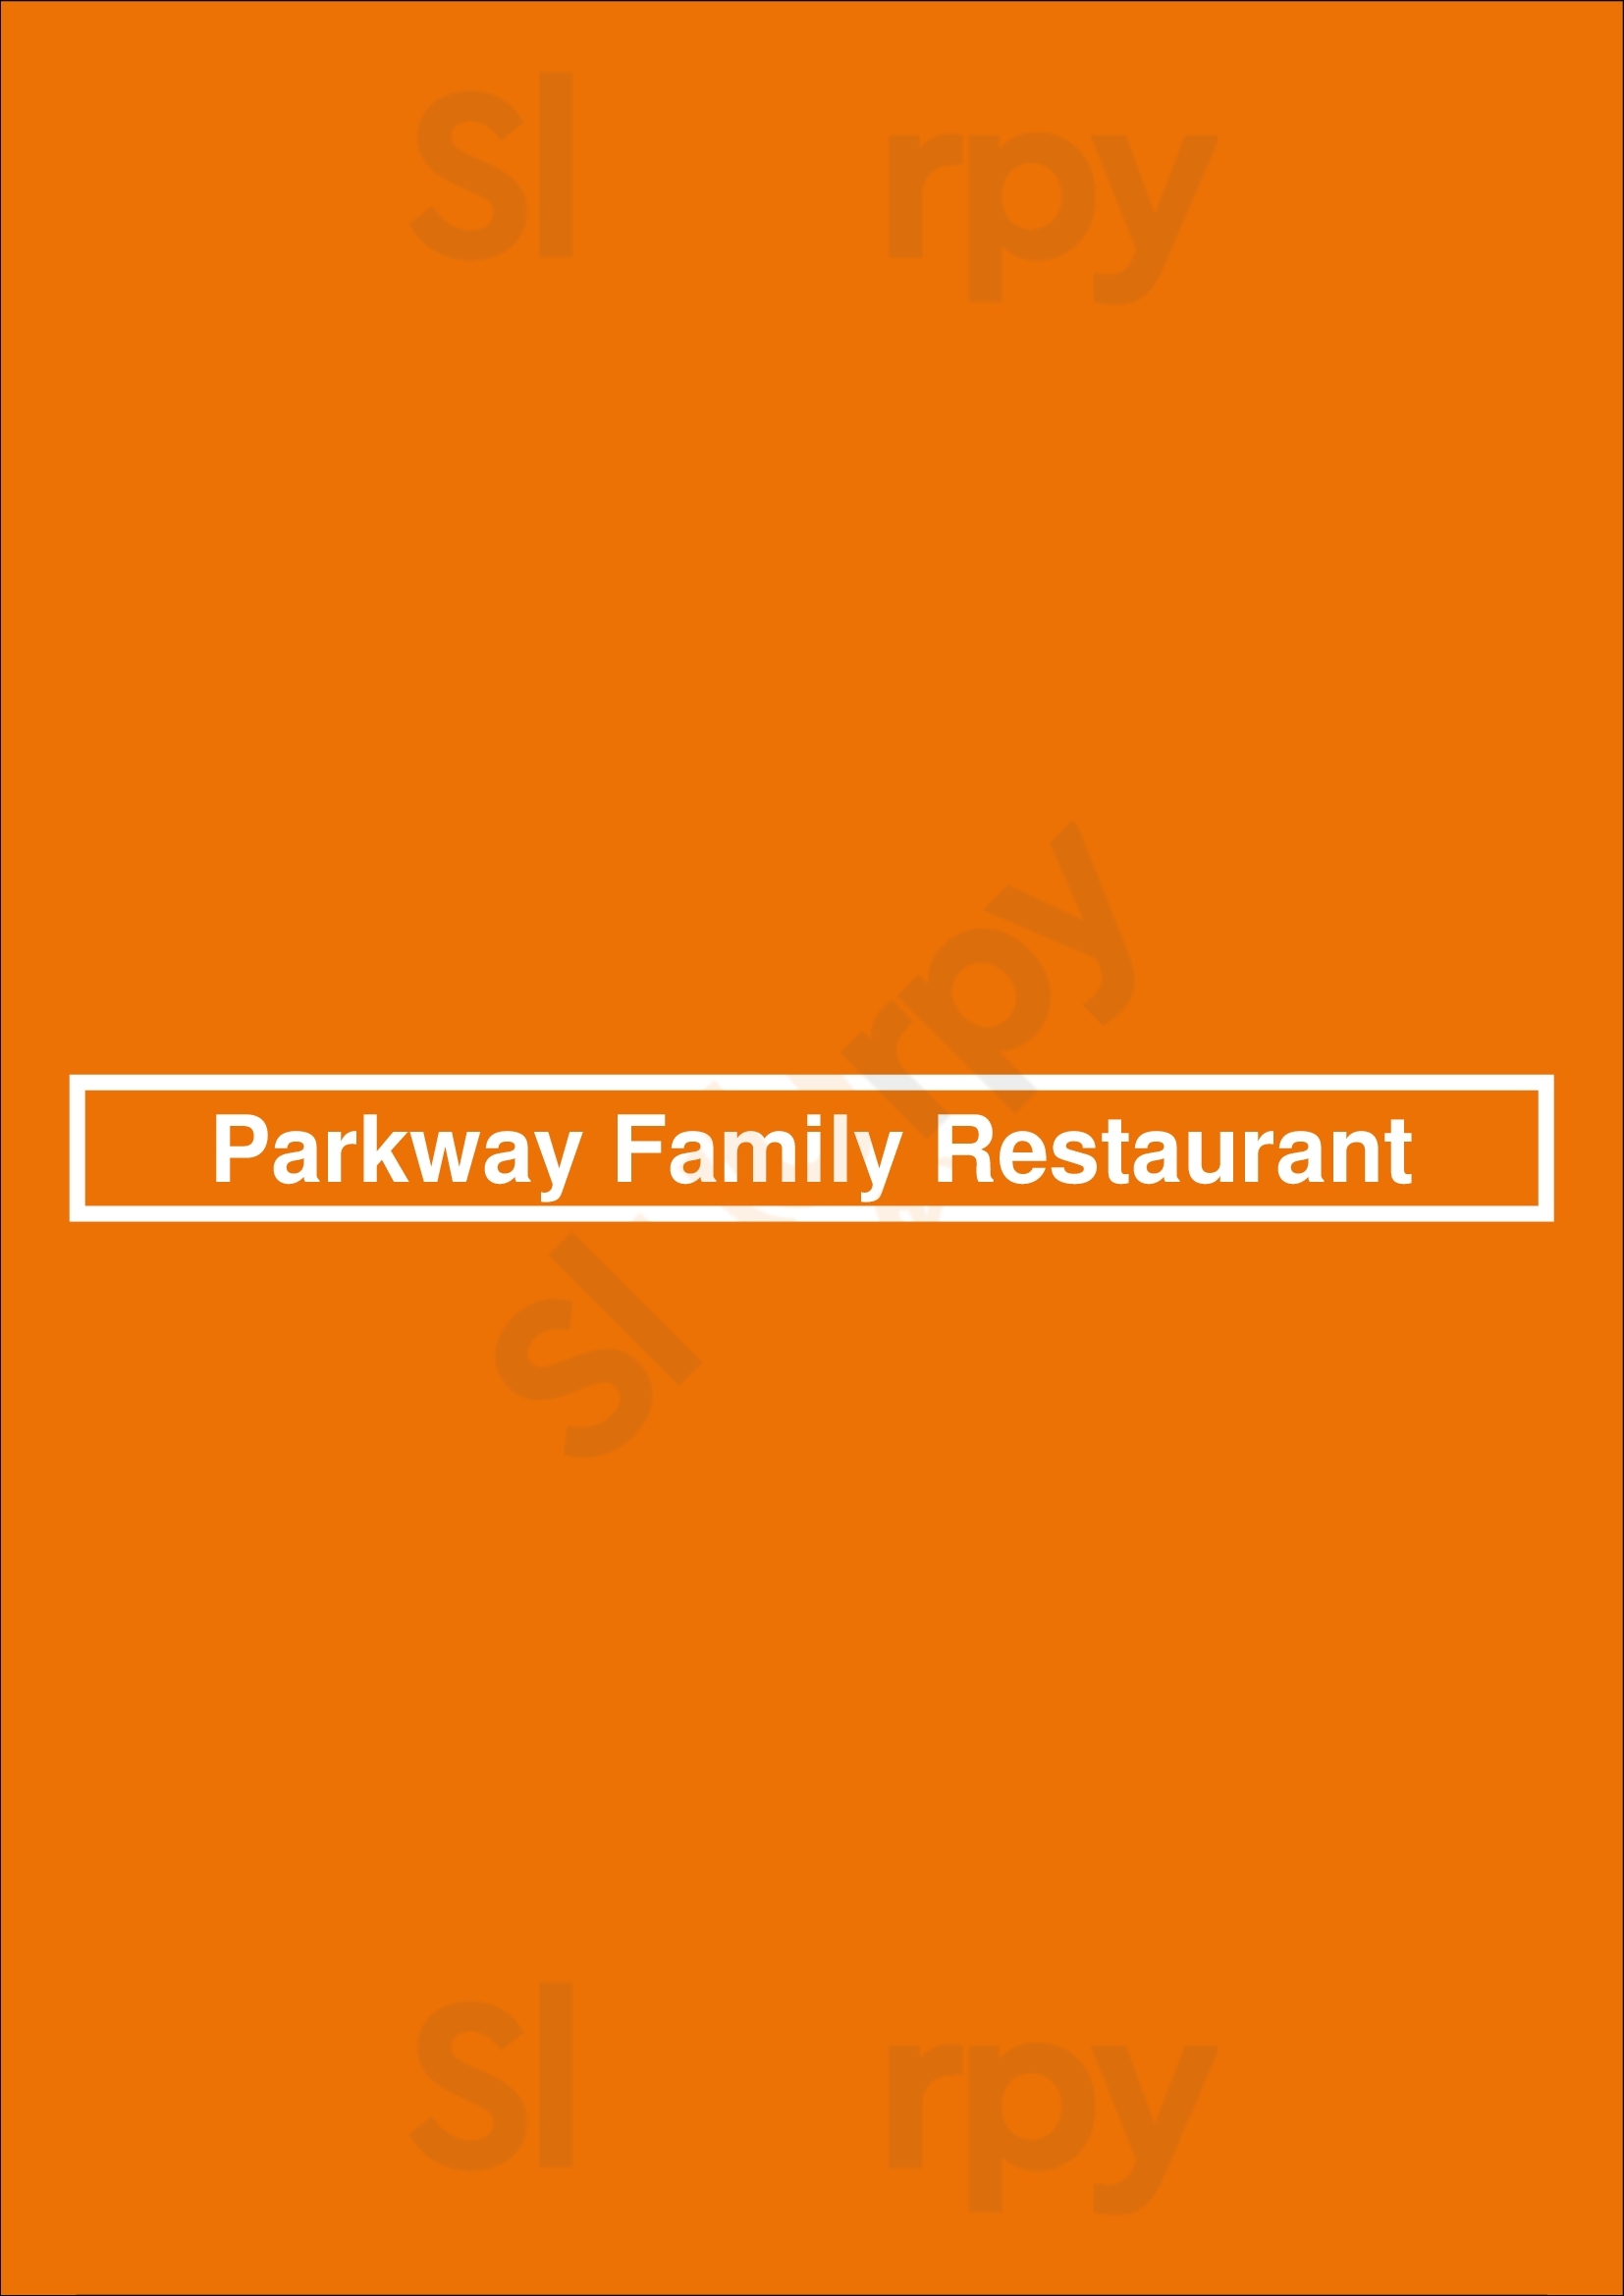 Parkway Family Restaurant Madison Menu - 1